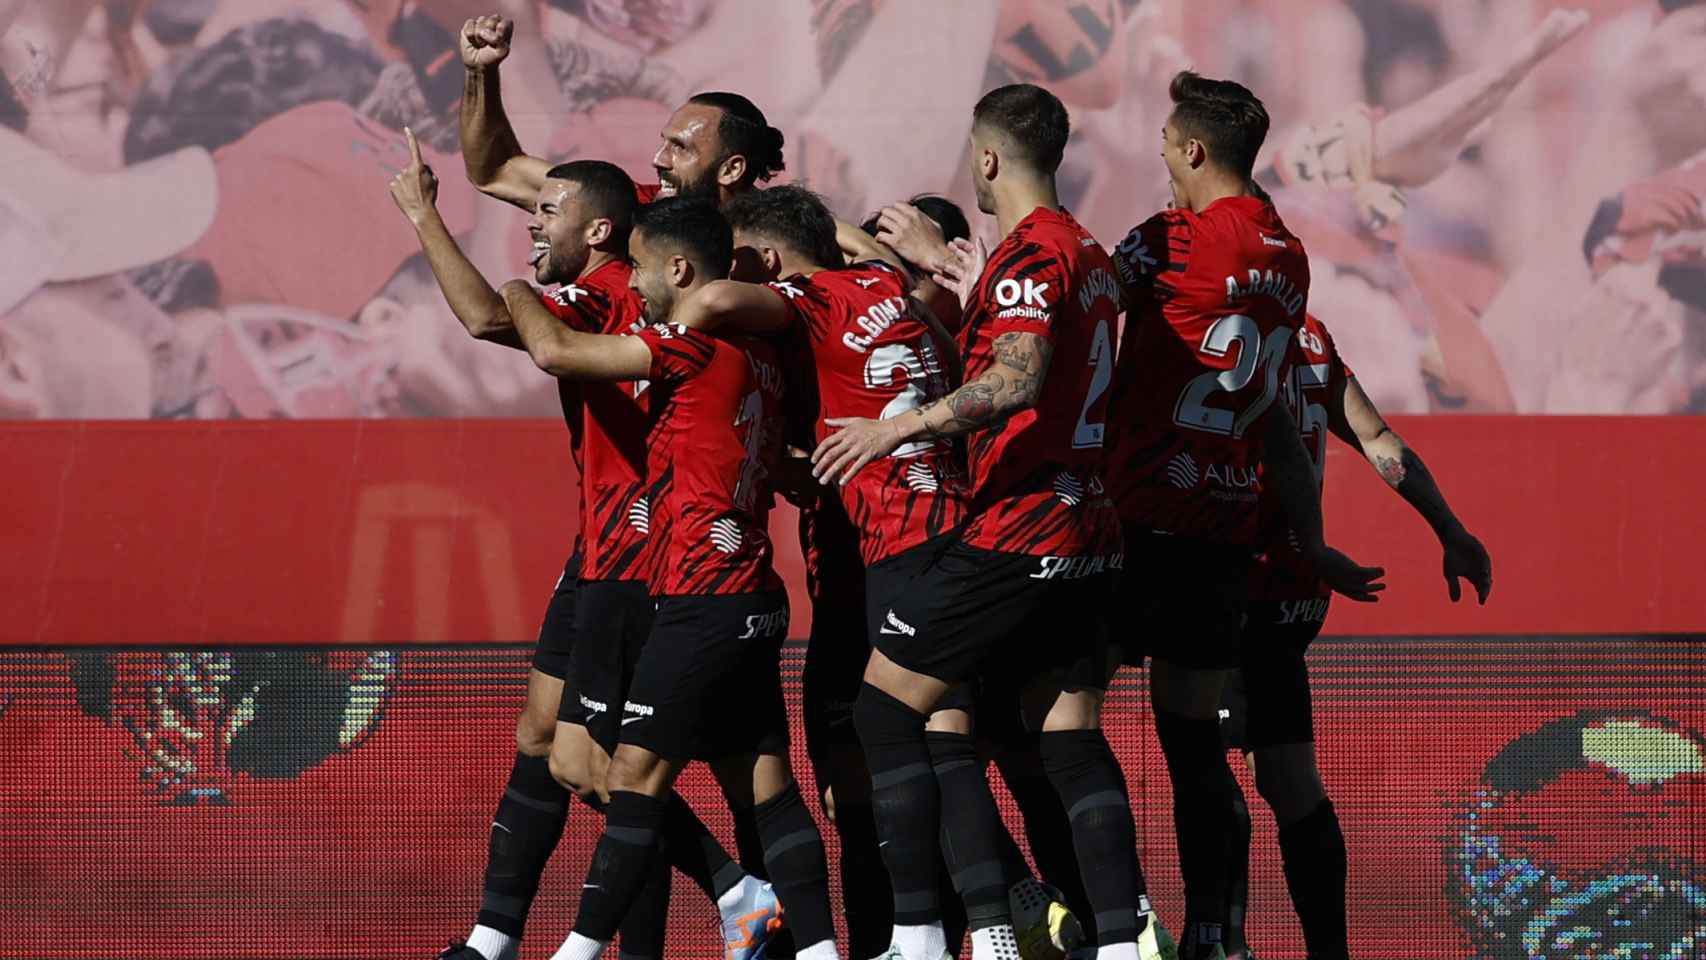 Piña de los jugadores del RCD Mallorca para celebrar el gol de Muriqi